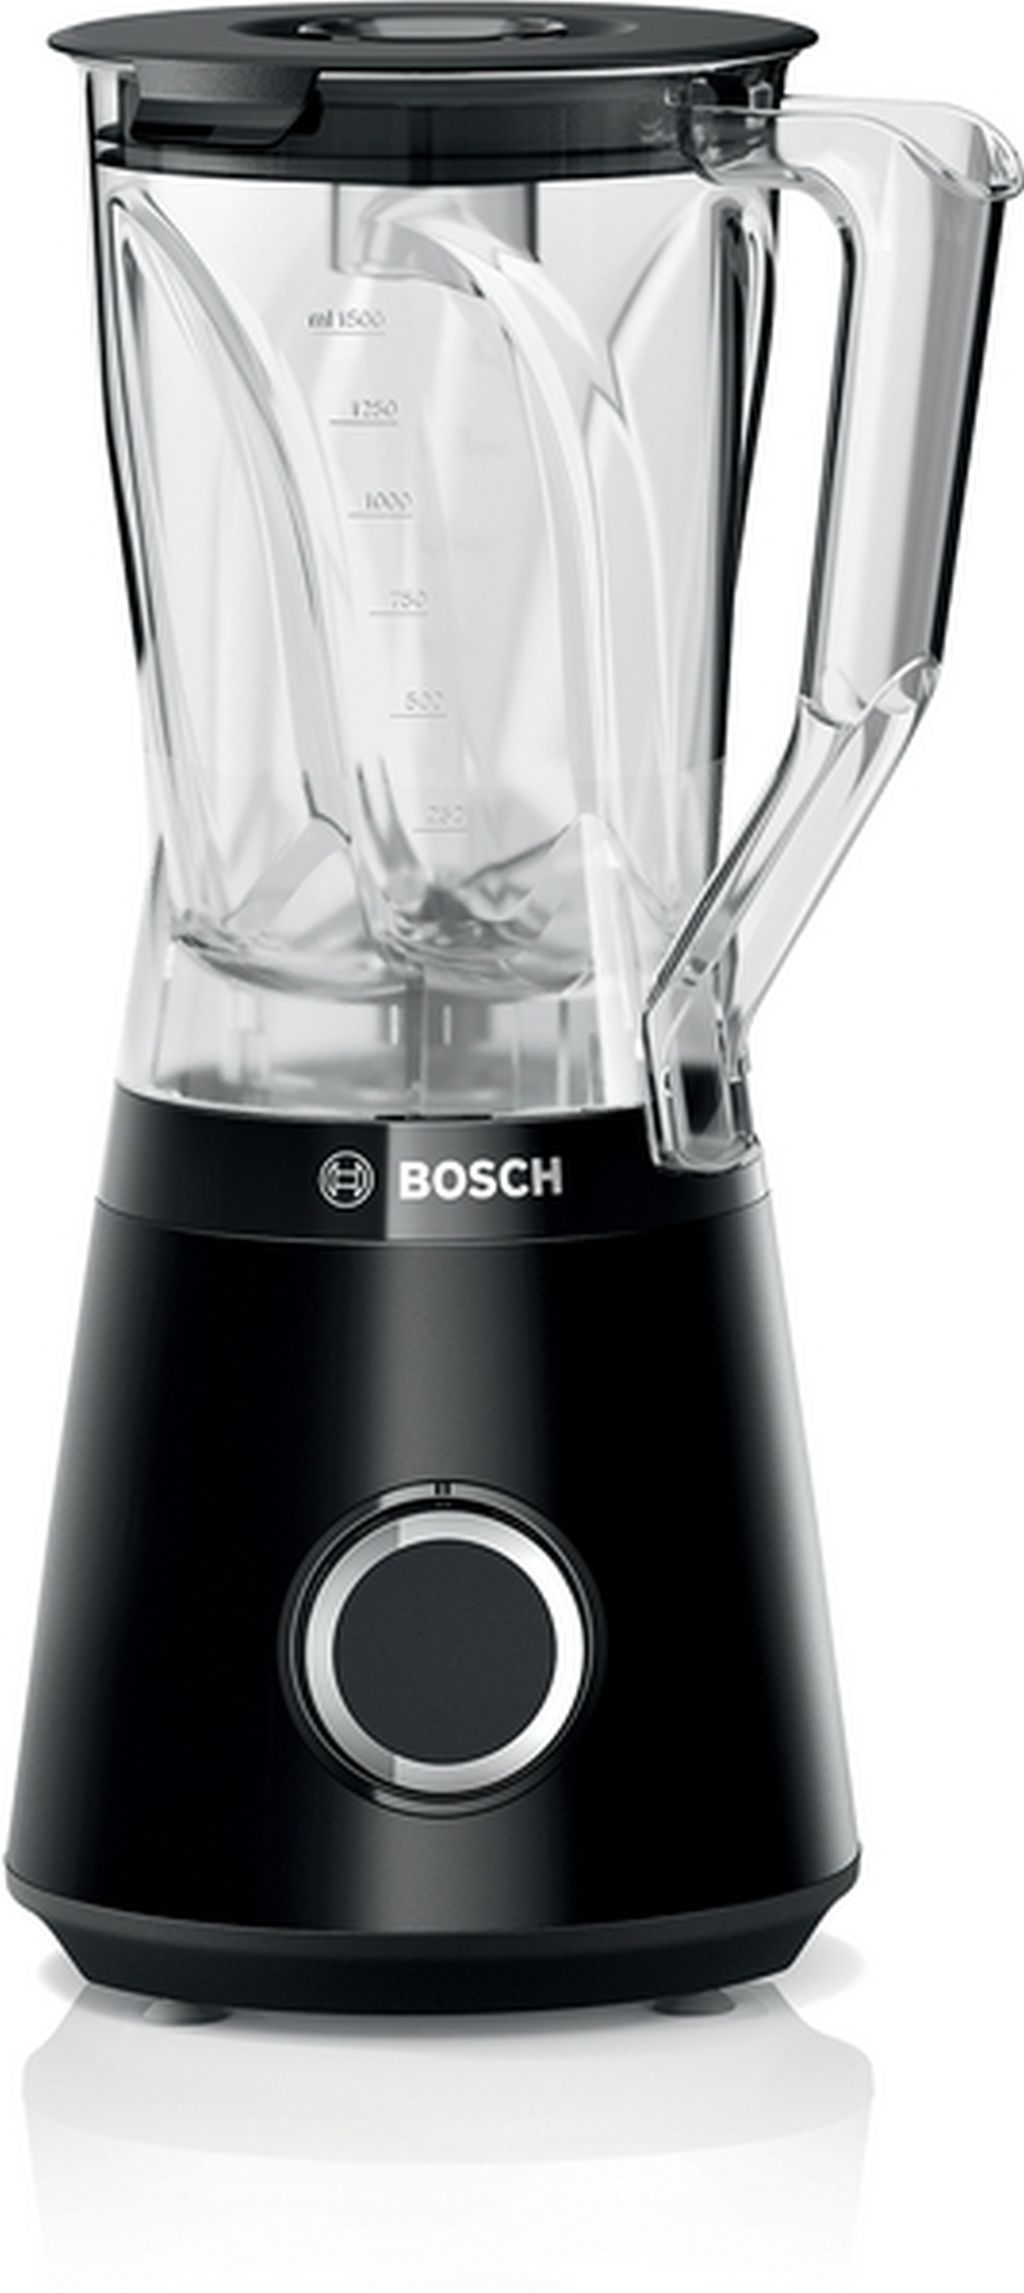 Bosch Mixér, VitaPower Serie | 4, 1200 W, Černá MMB6141B